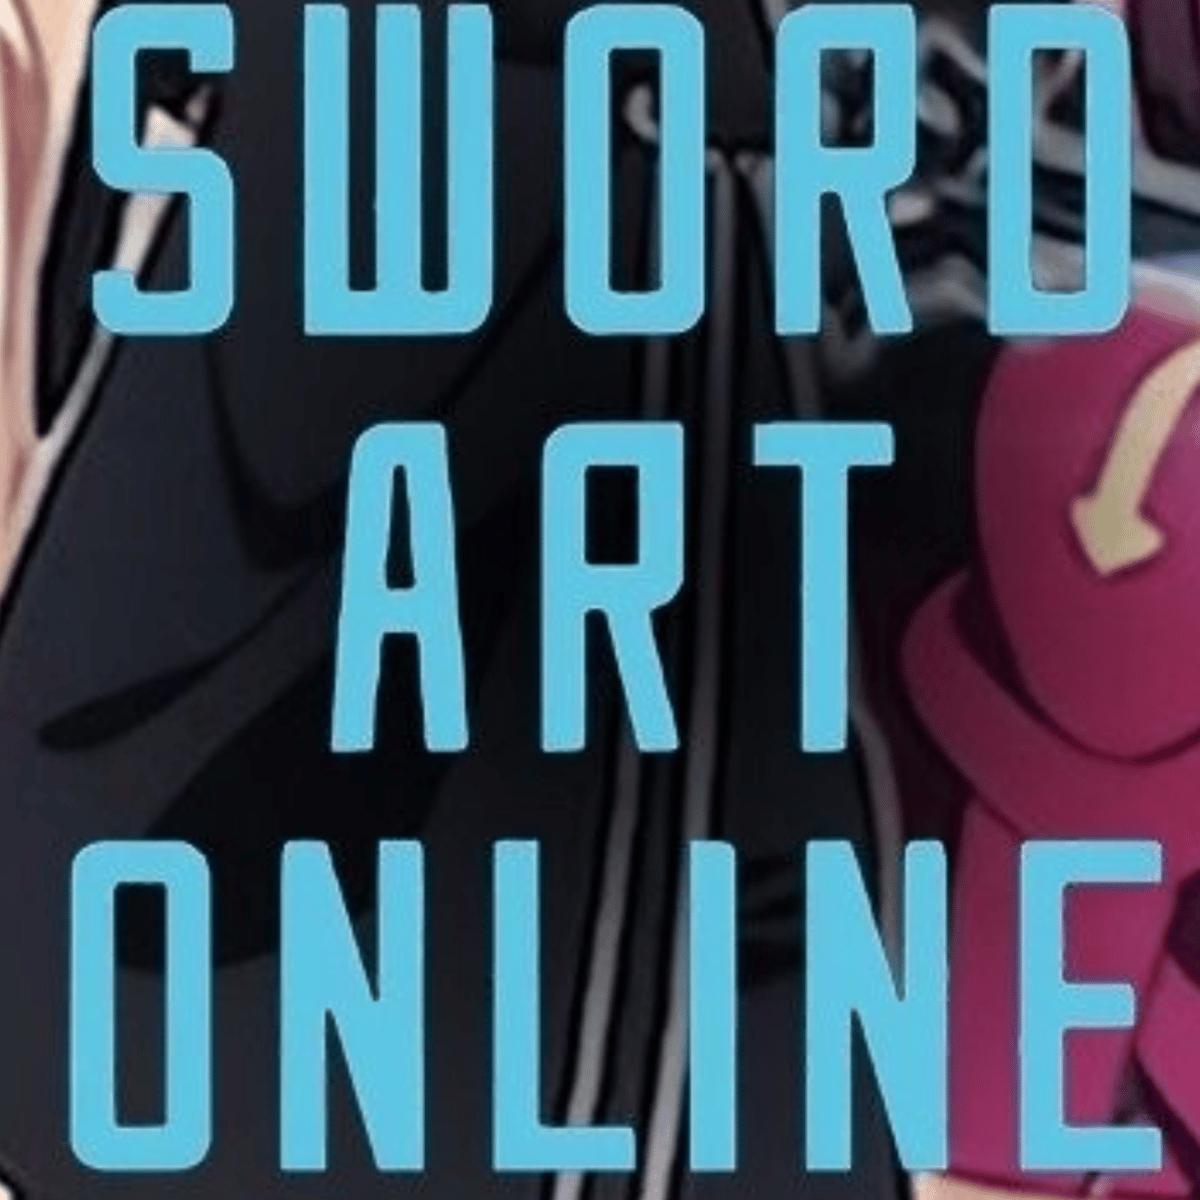 Sword Art Online RPG